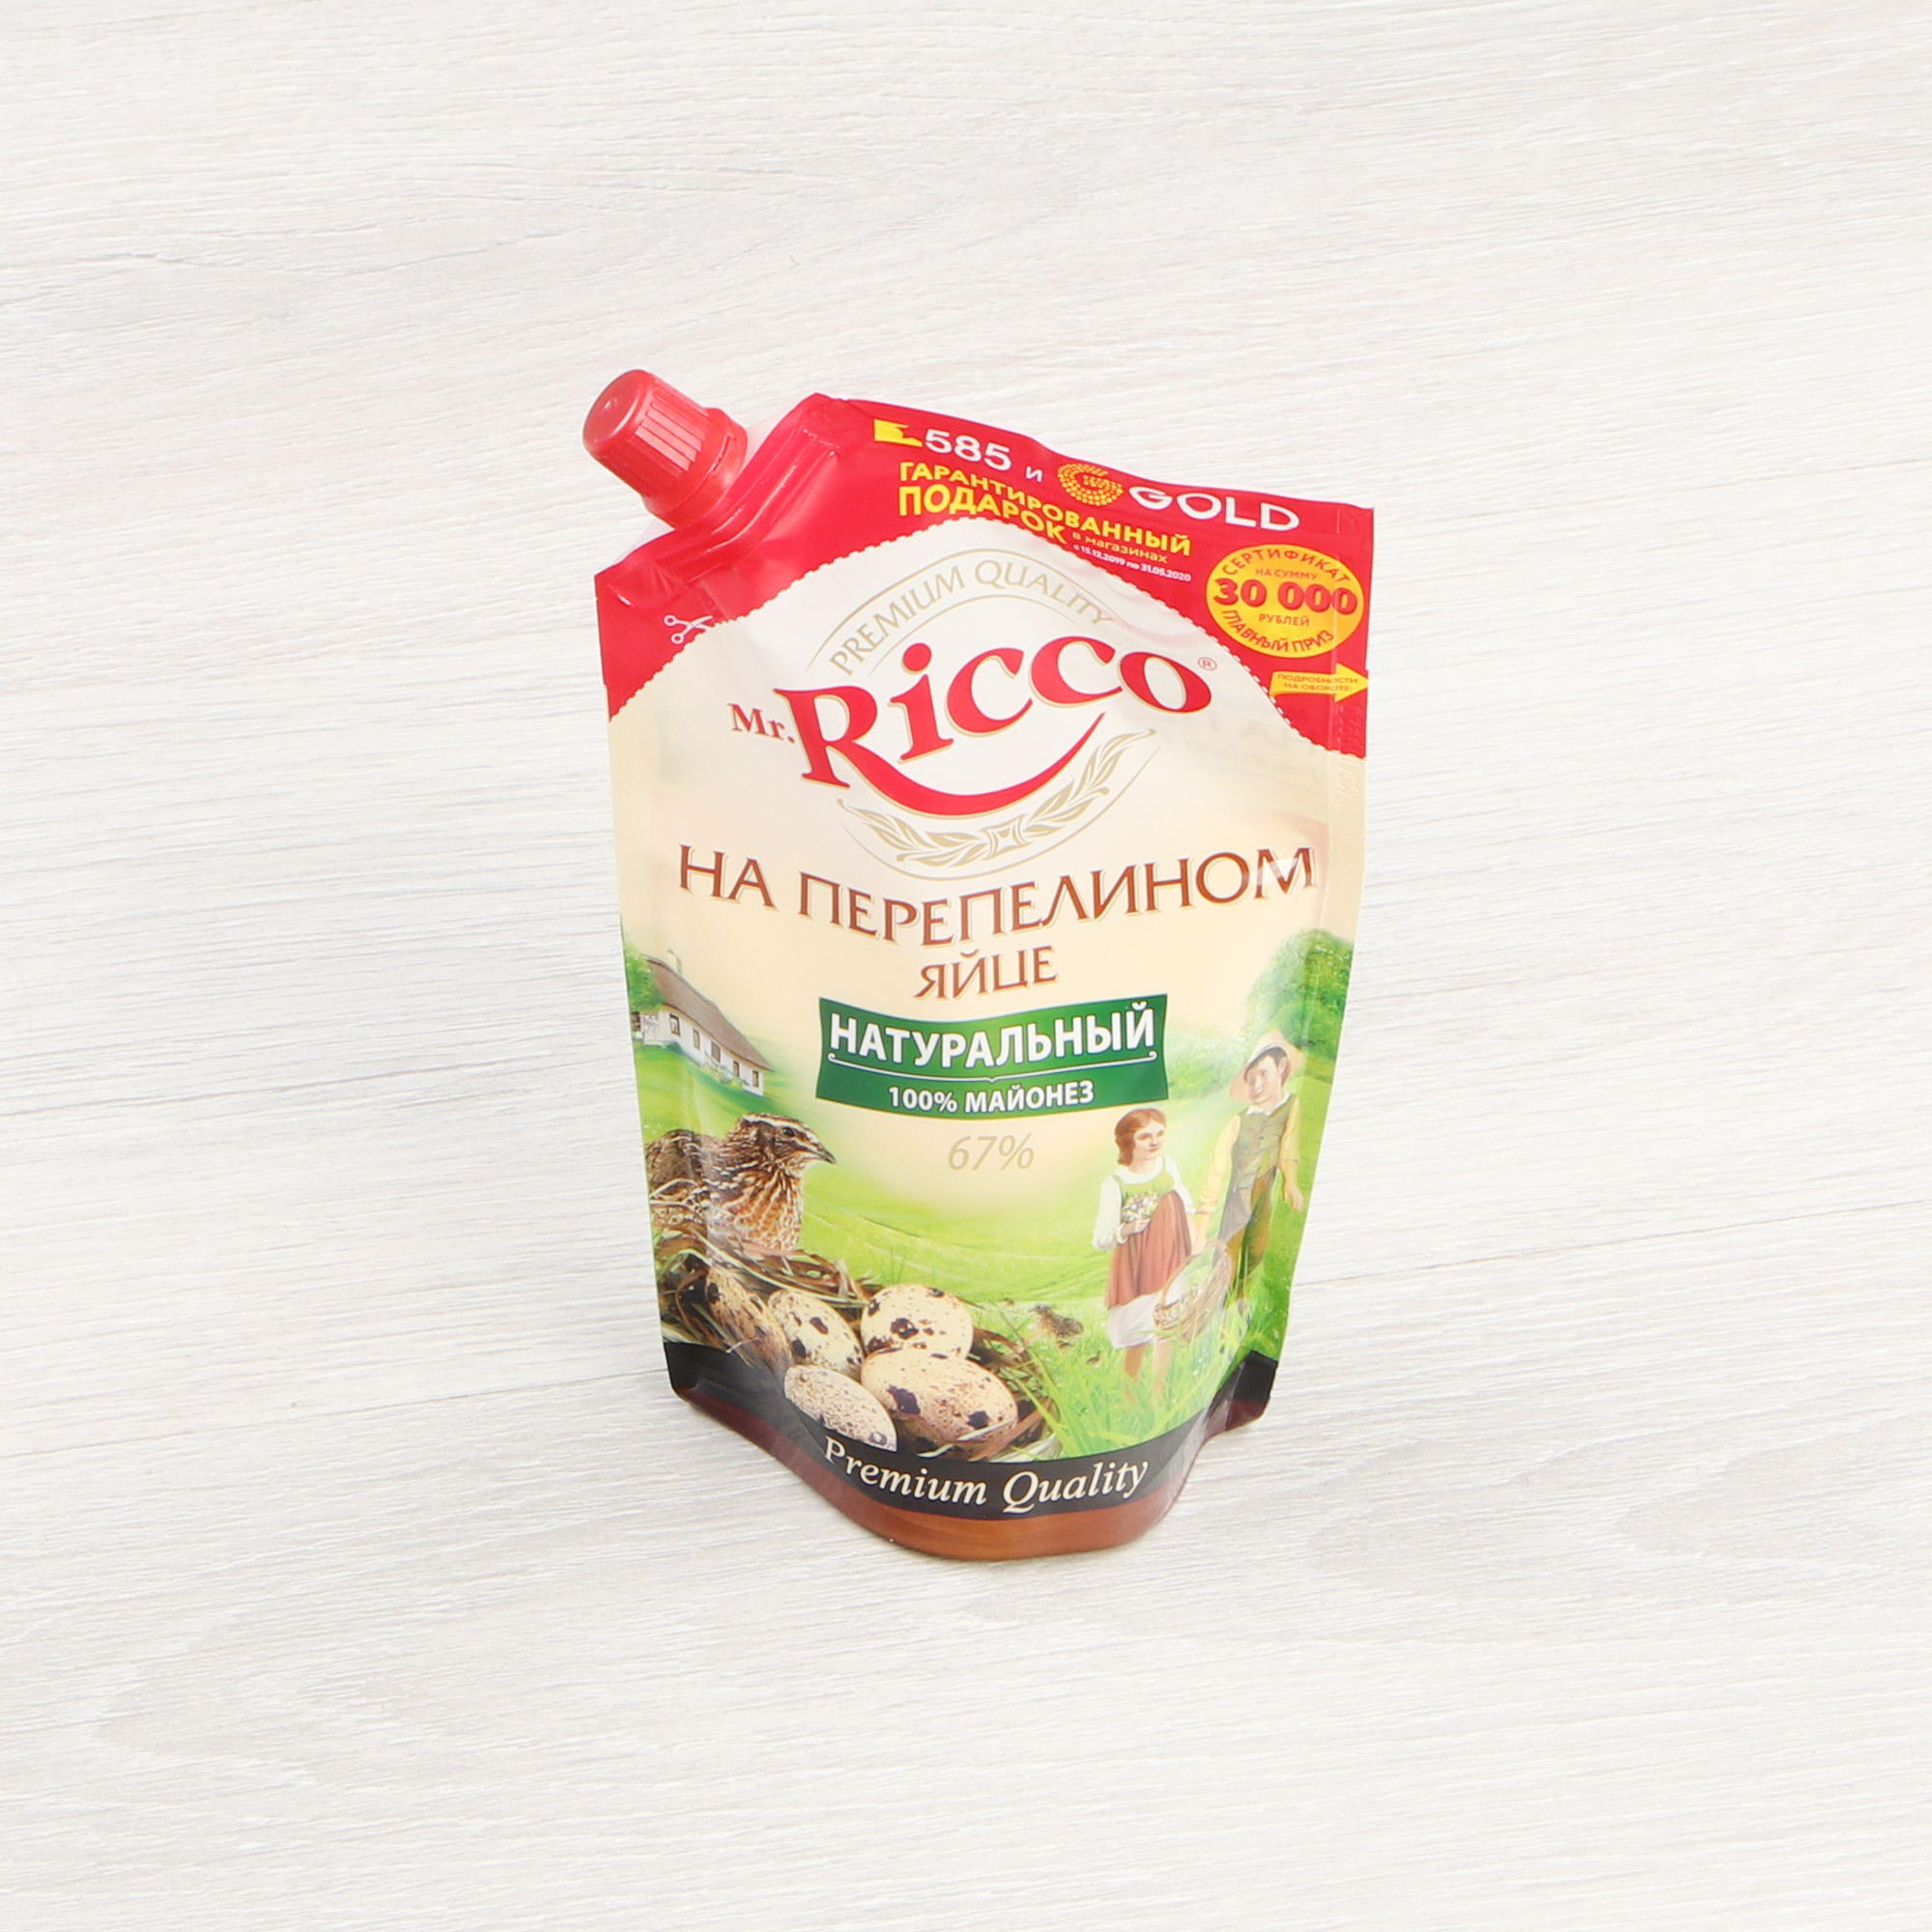 Майонез Mr.Ricco Organic перепелиное яйцо 67% 400 мл майонез mr ricco organic на перепелином яйце 67% 400 мл